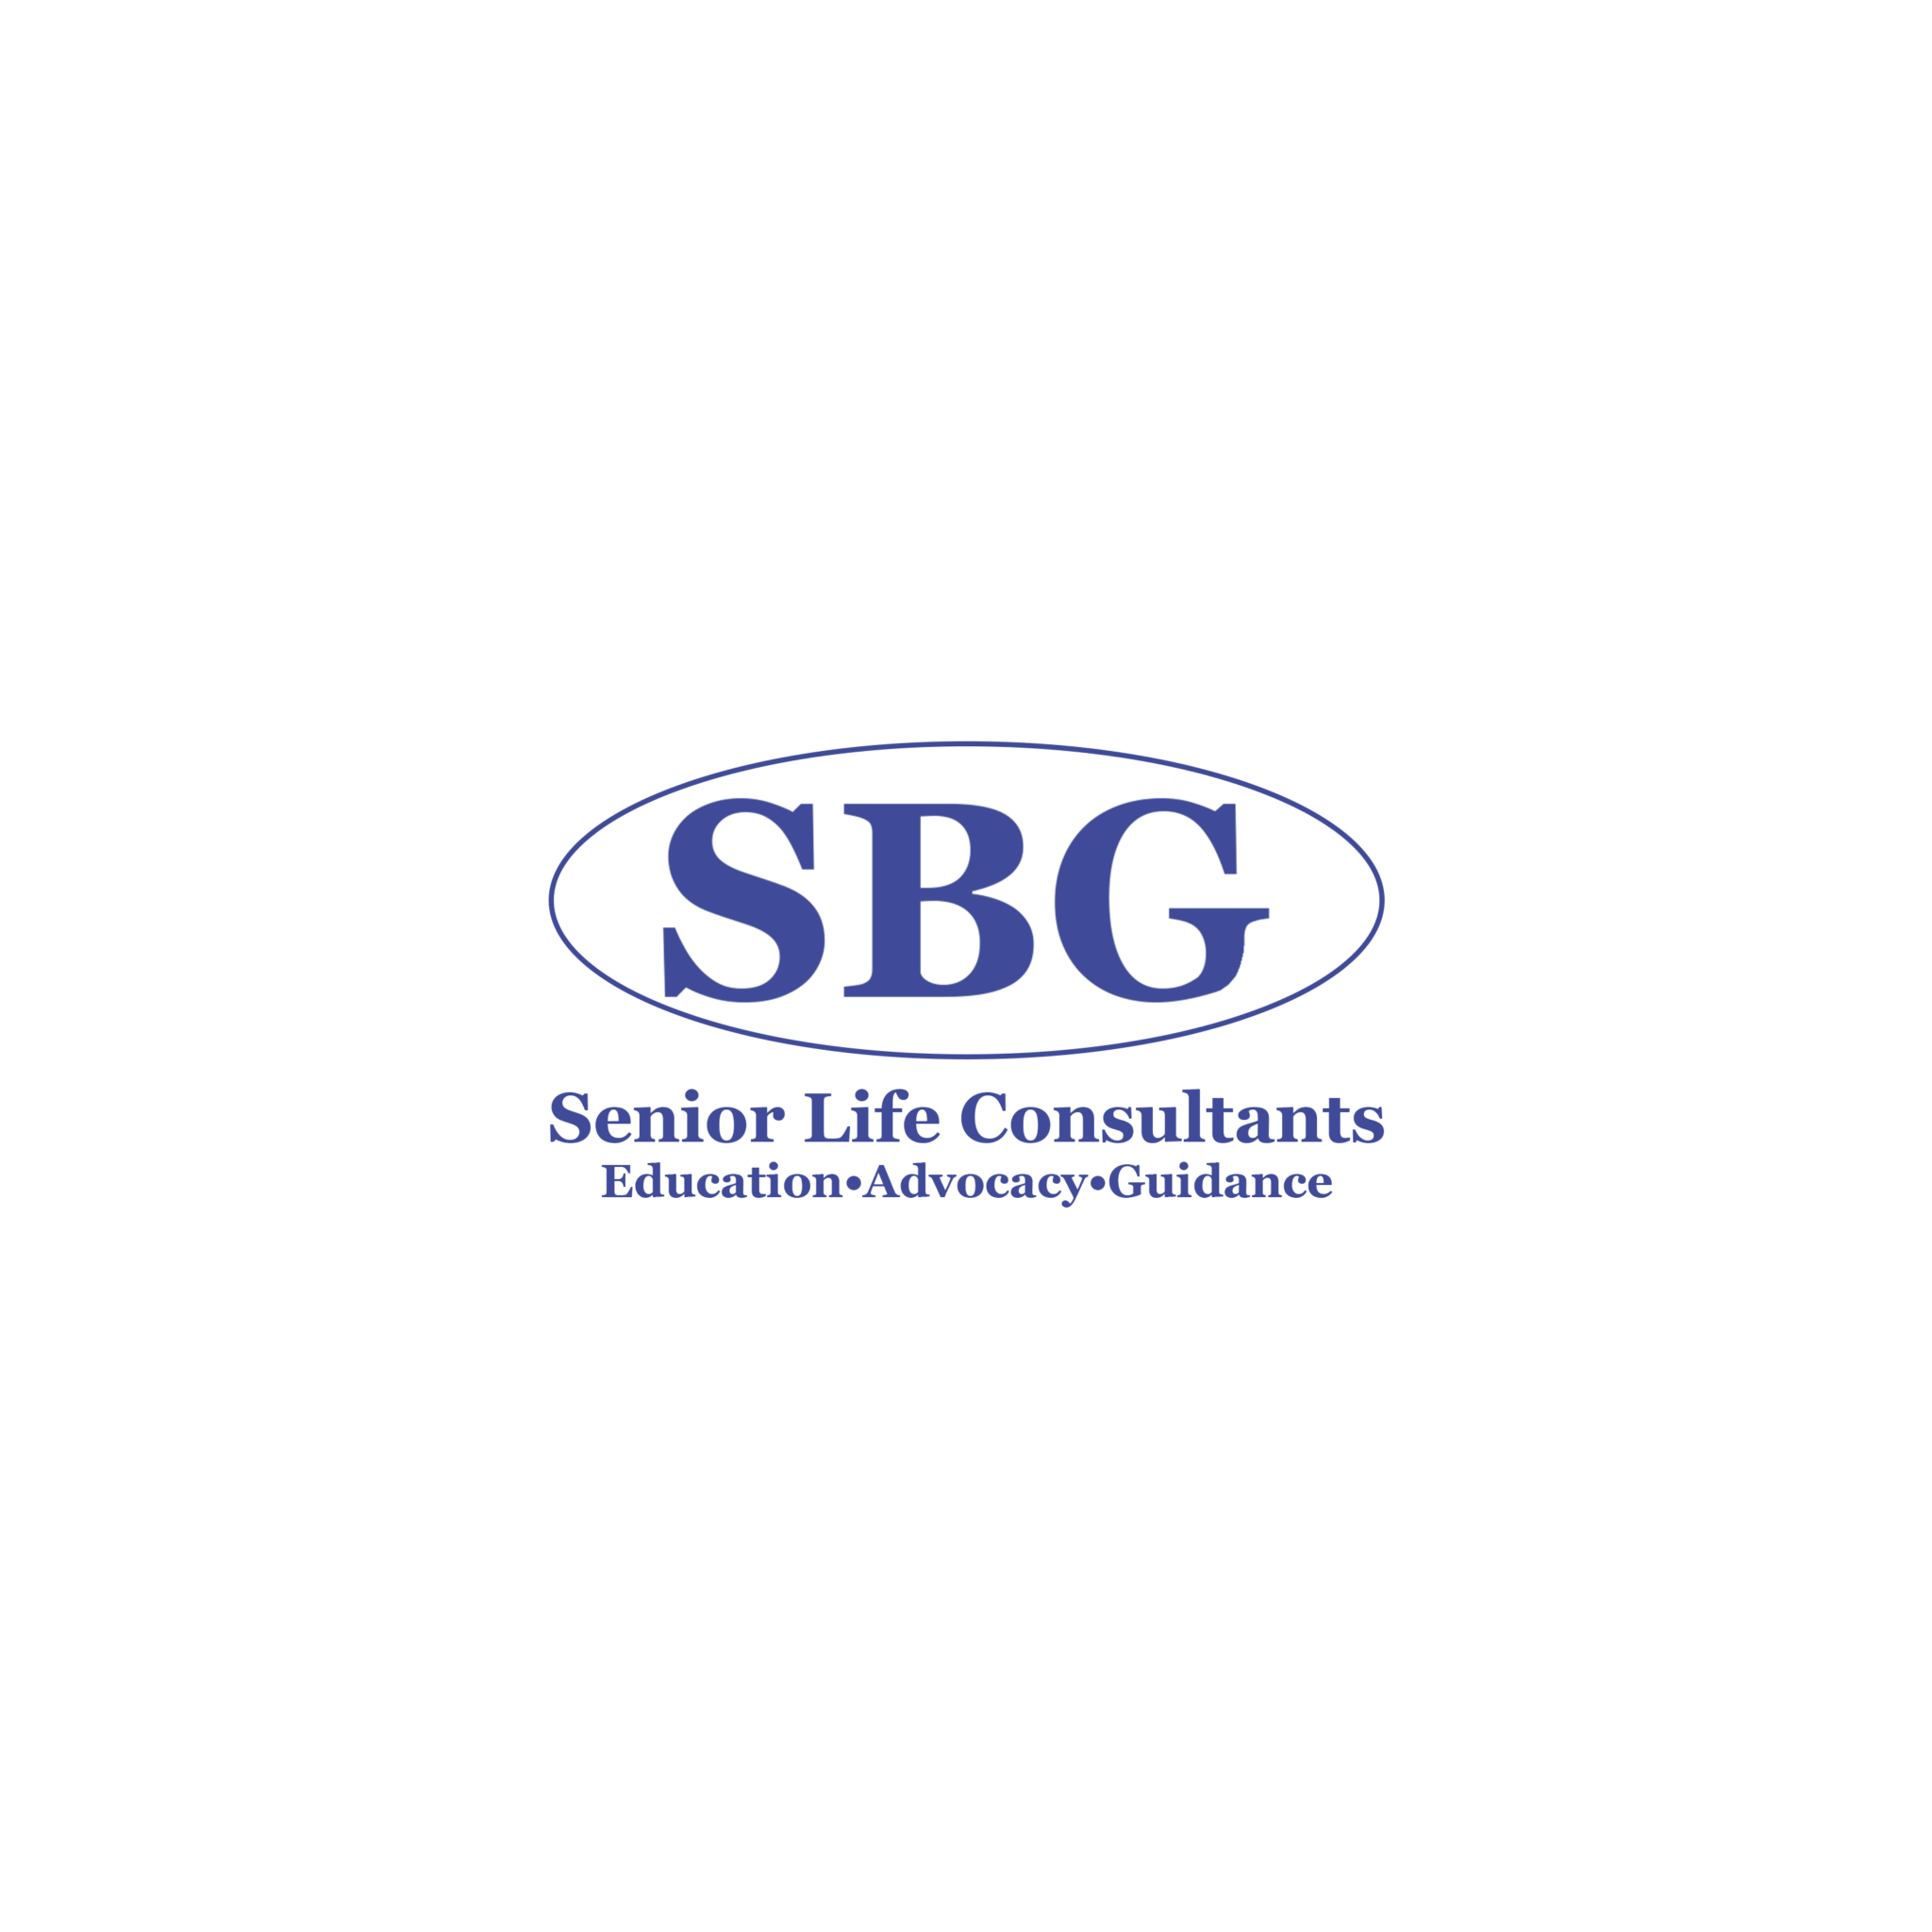 Sbg letter logo abstract creative design Vector Image